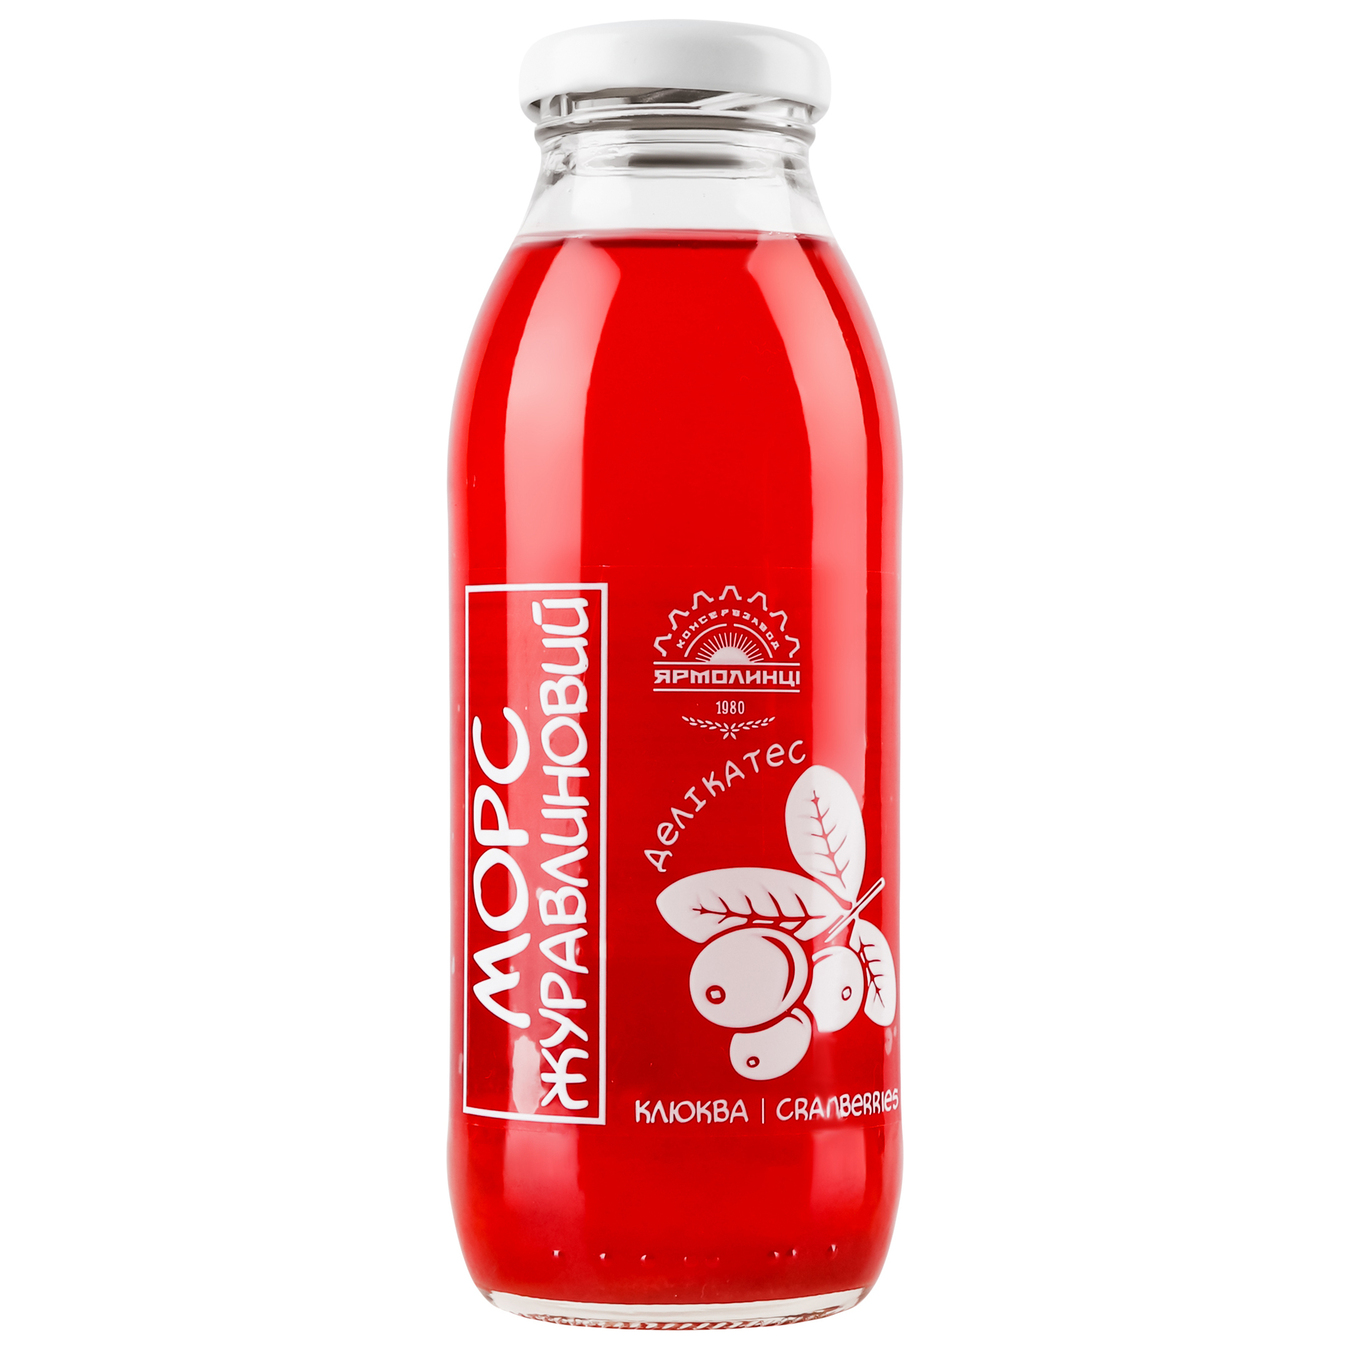 Mors Yarmolyntsi cranberry 0.3l glass bottle